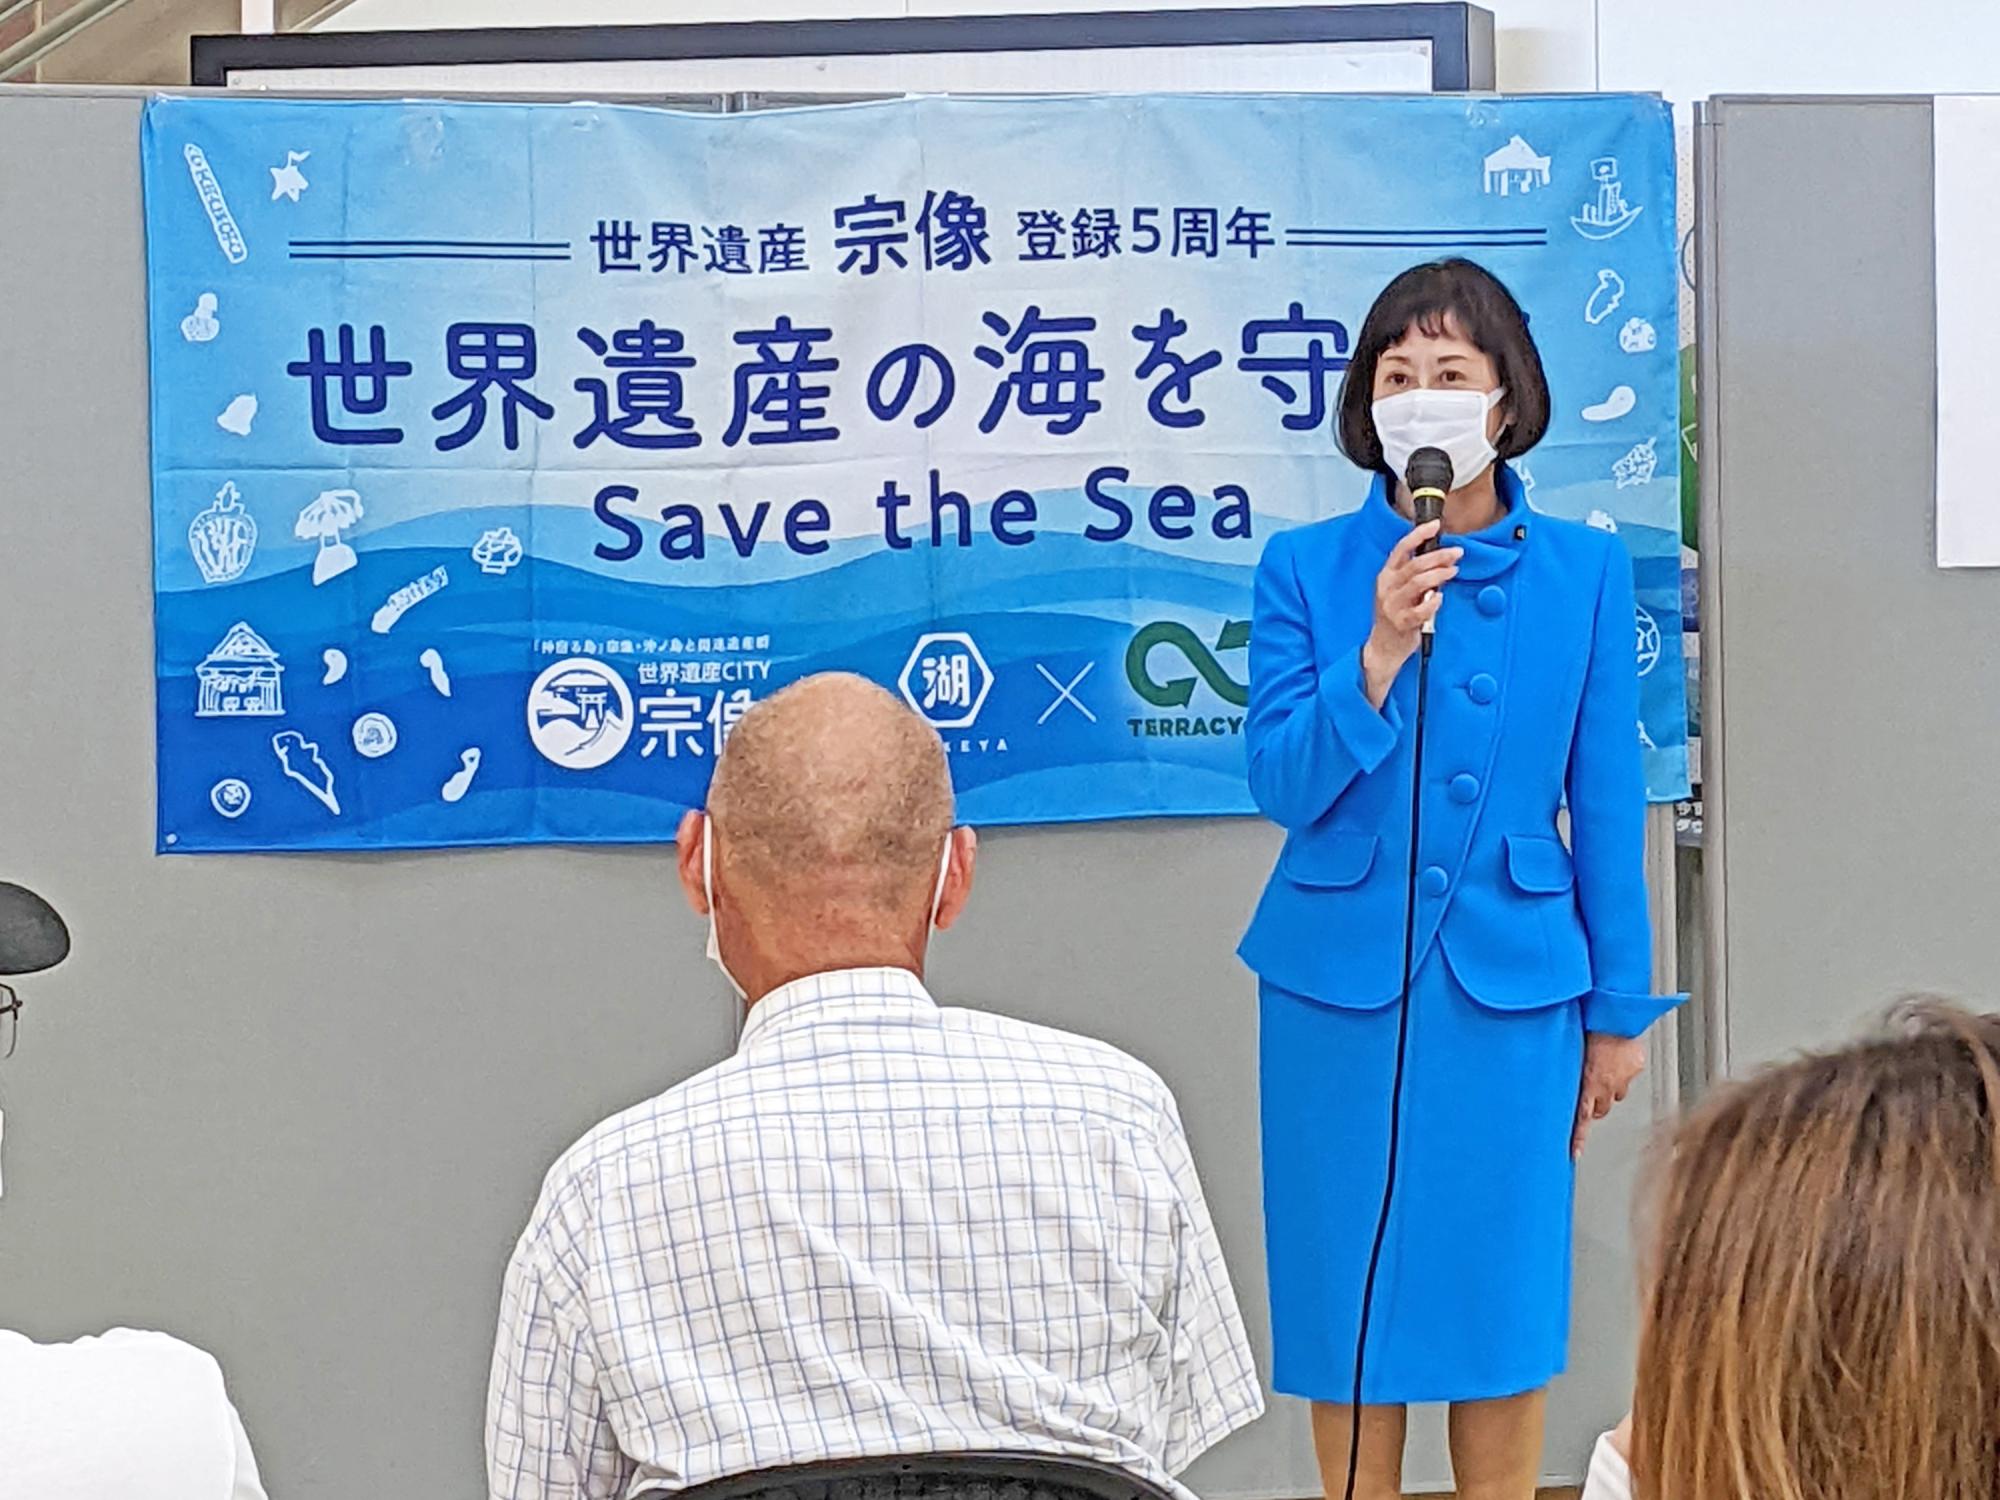 「Save the Sea」への熱い思いを語る市長